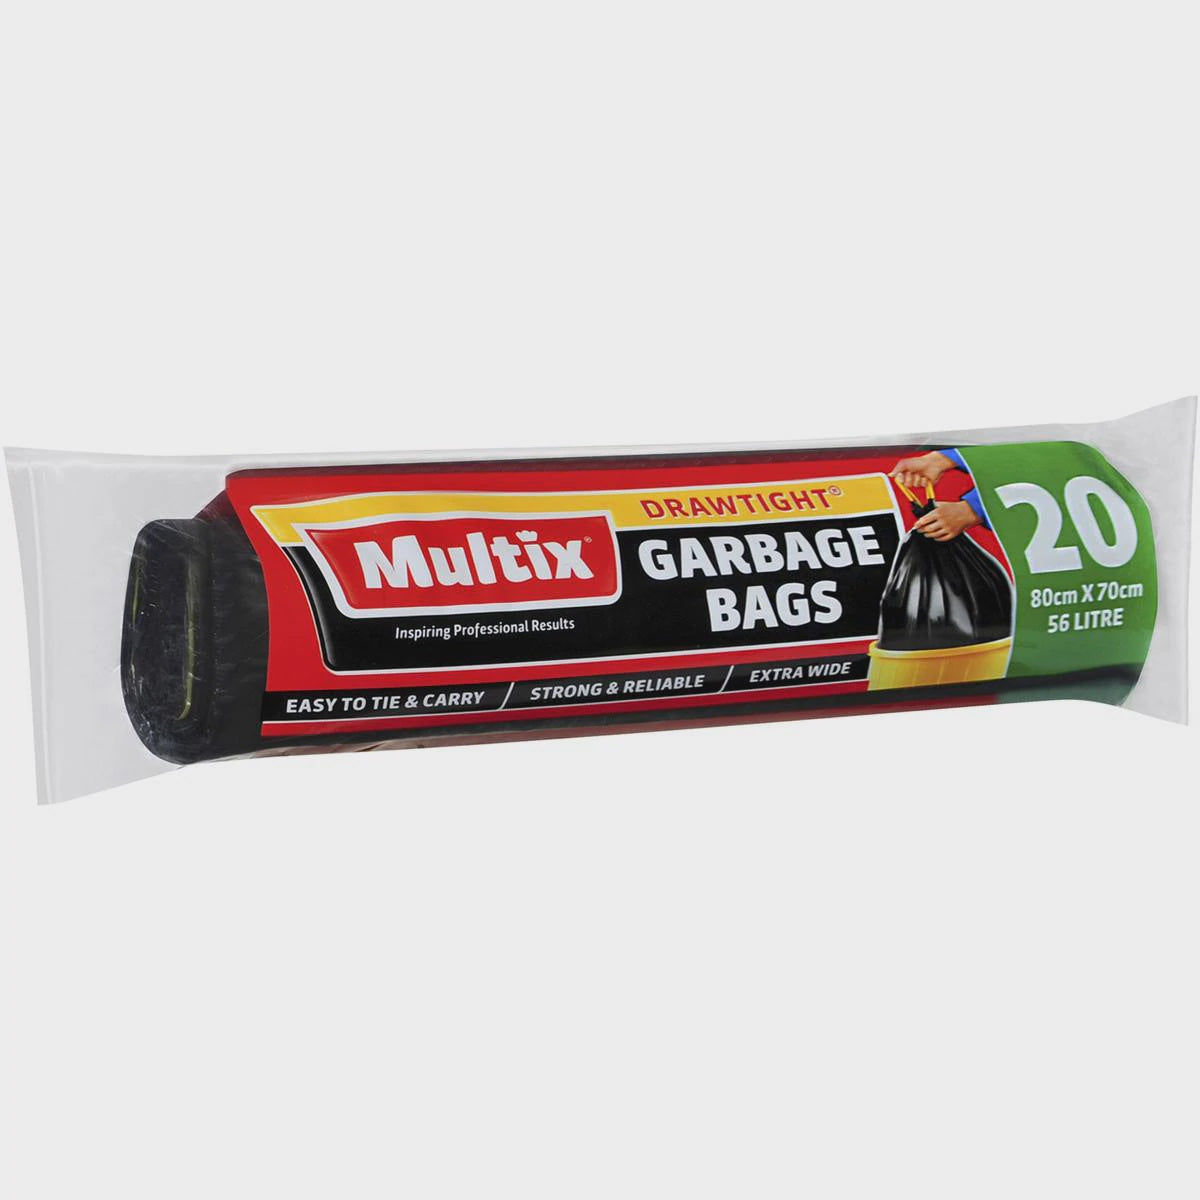 Multix Garbage Bags Drawtight 56L 20pk